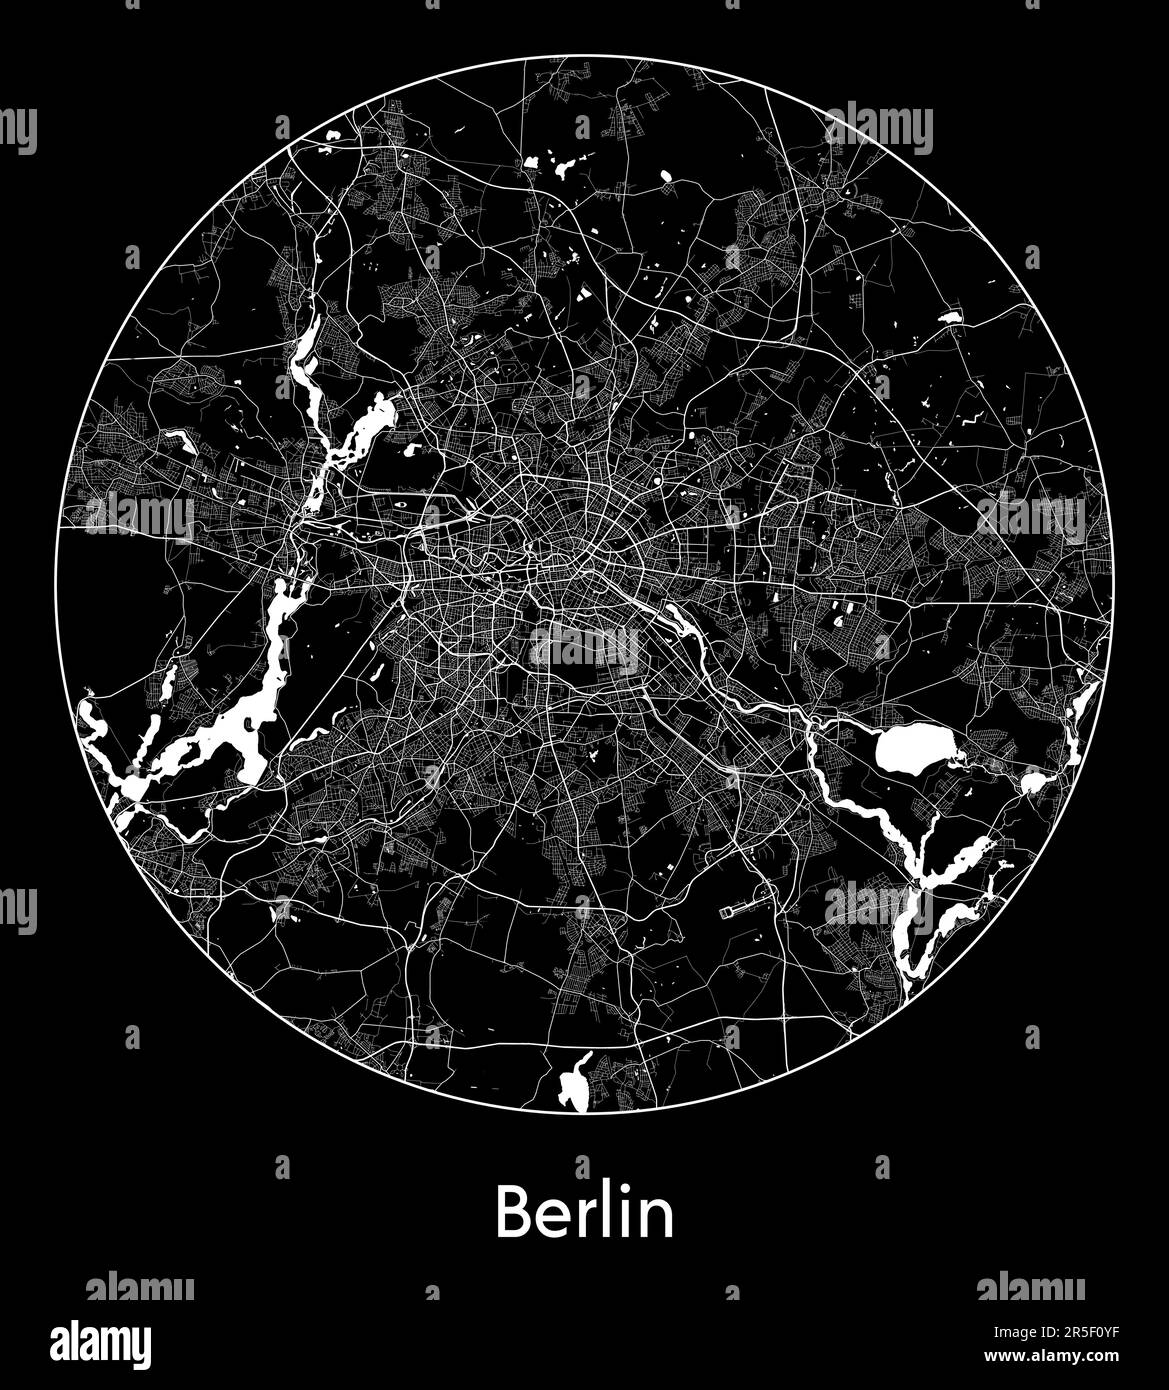 City Map Berlin Germany Europe vector illustration Stock Vector